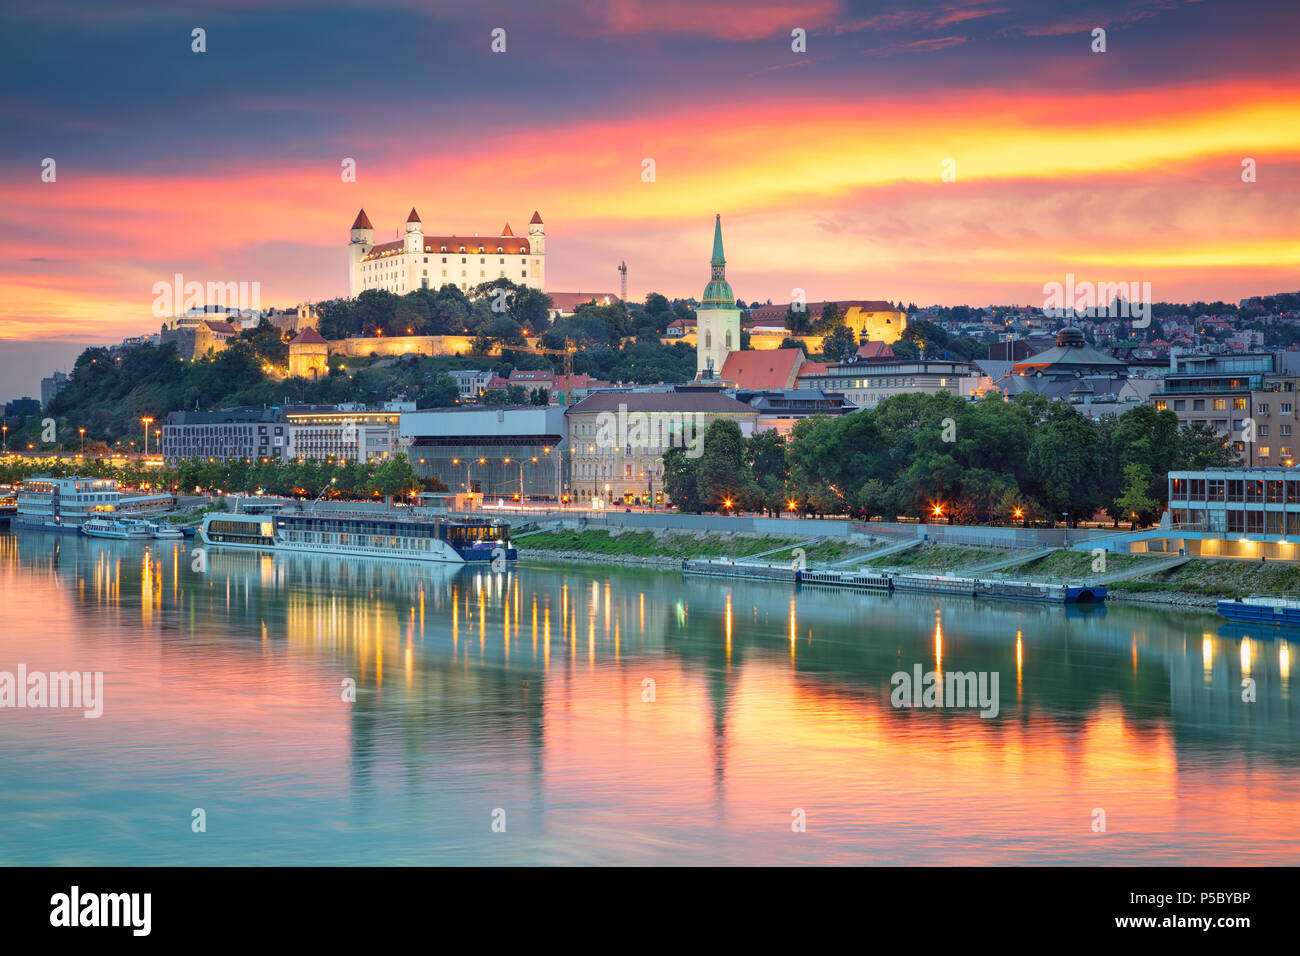 Bratislava. Cityscape image of Bratislava, capital city of Slovakia during sunset. Stock Photo